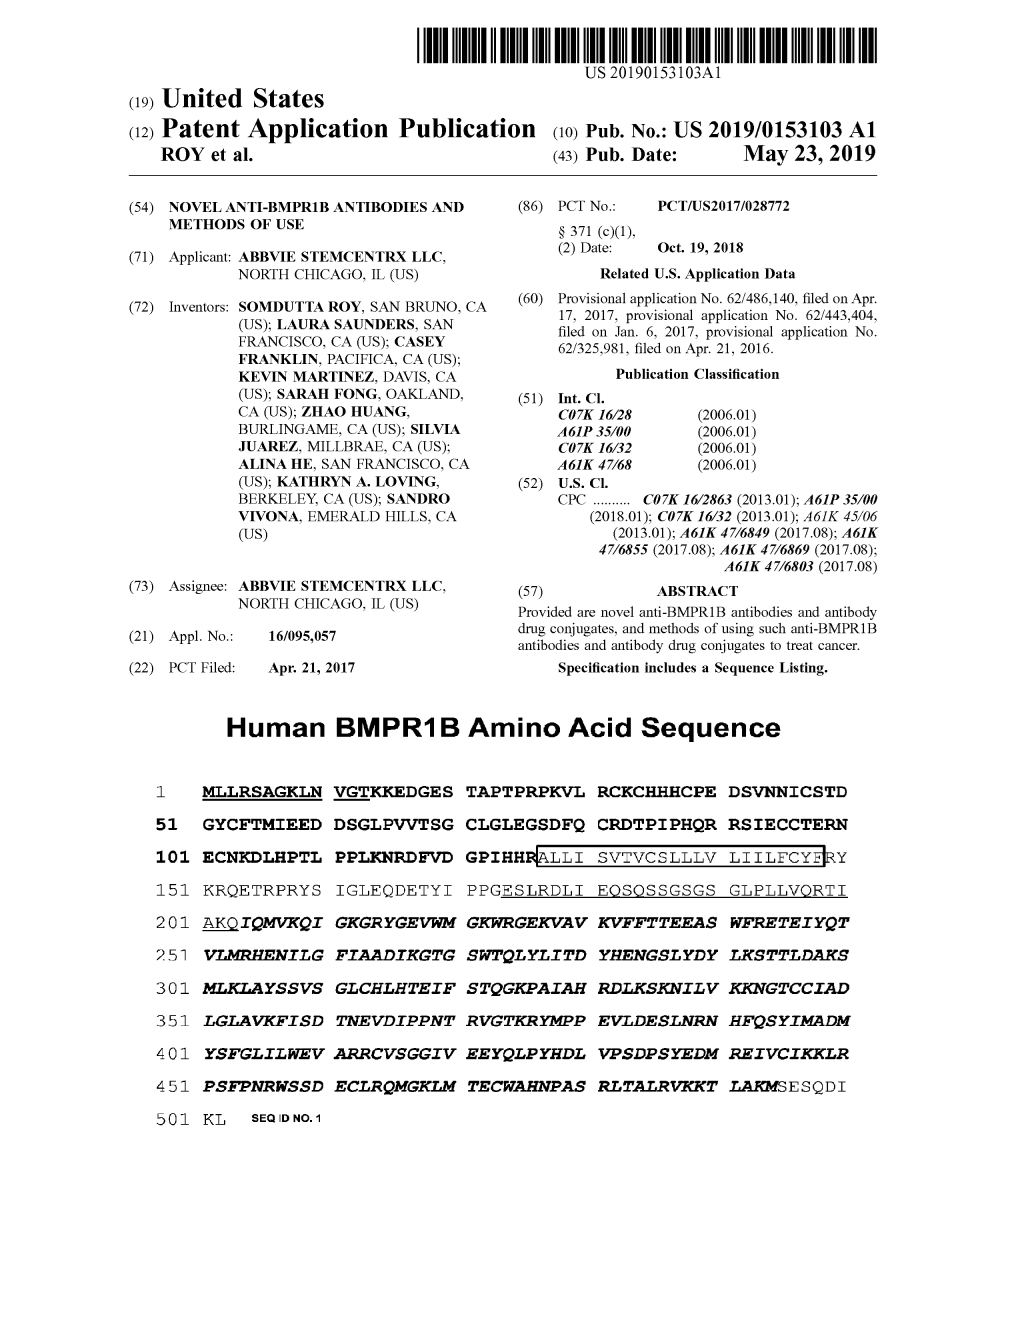 Human BMPR1B Amino Acid Sequence